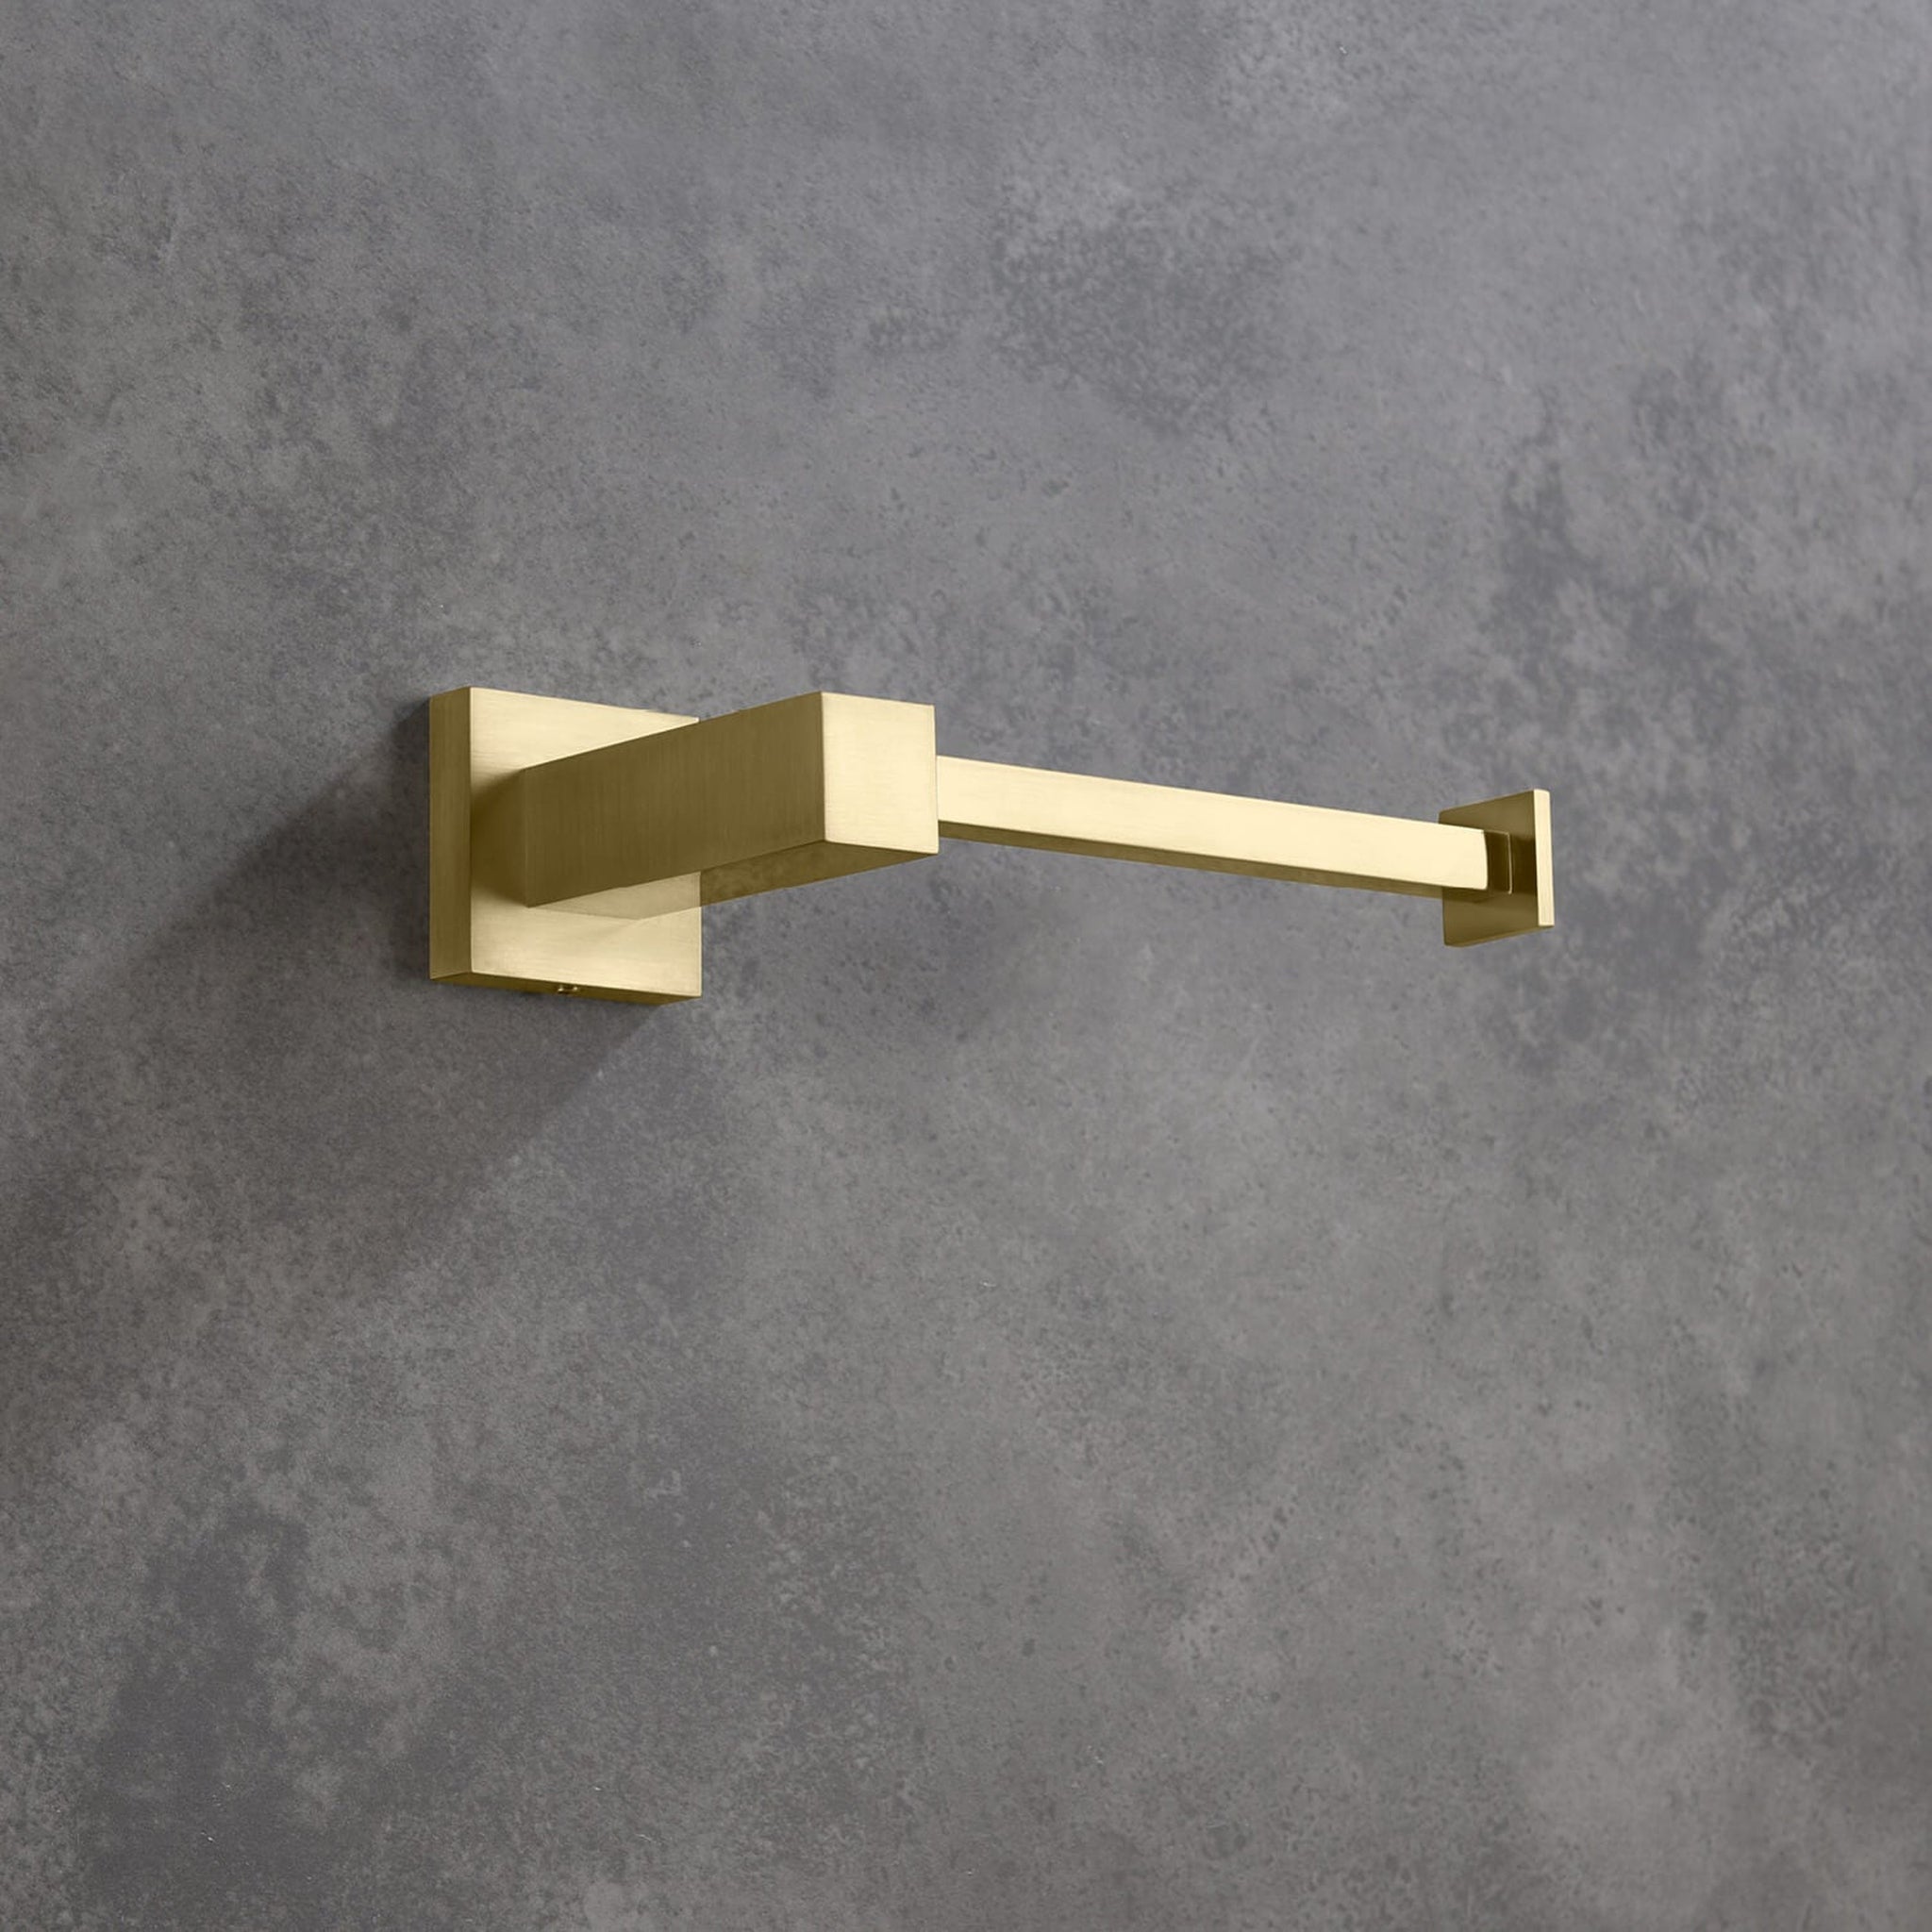 KIBI, KIBI Cube Brass Bathroom Tissue Holder in Brushed Gold Finish